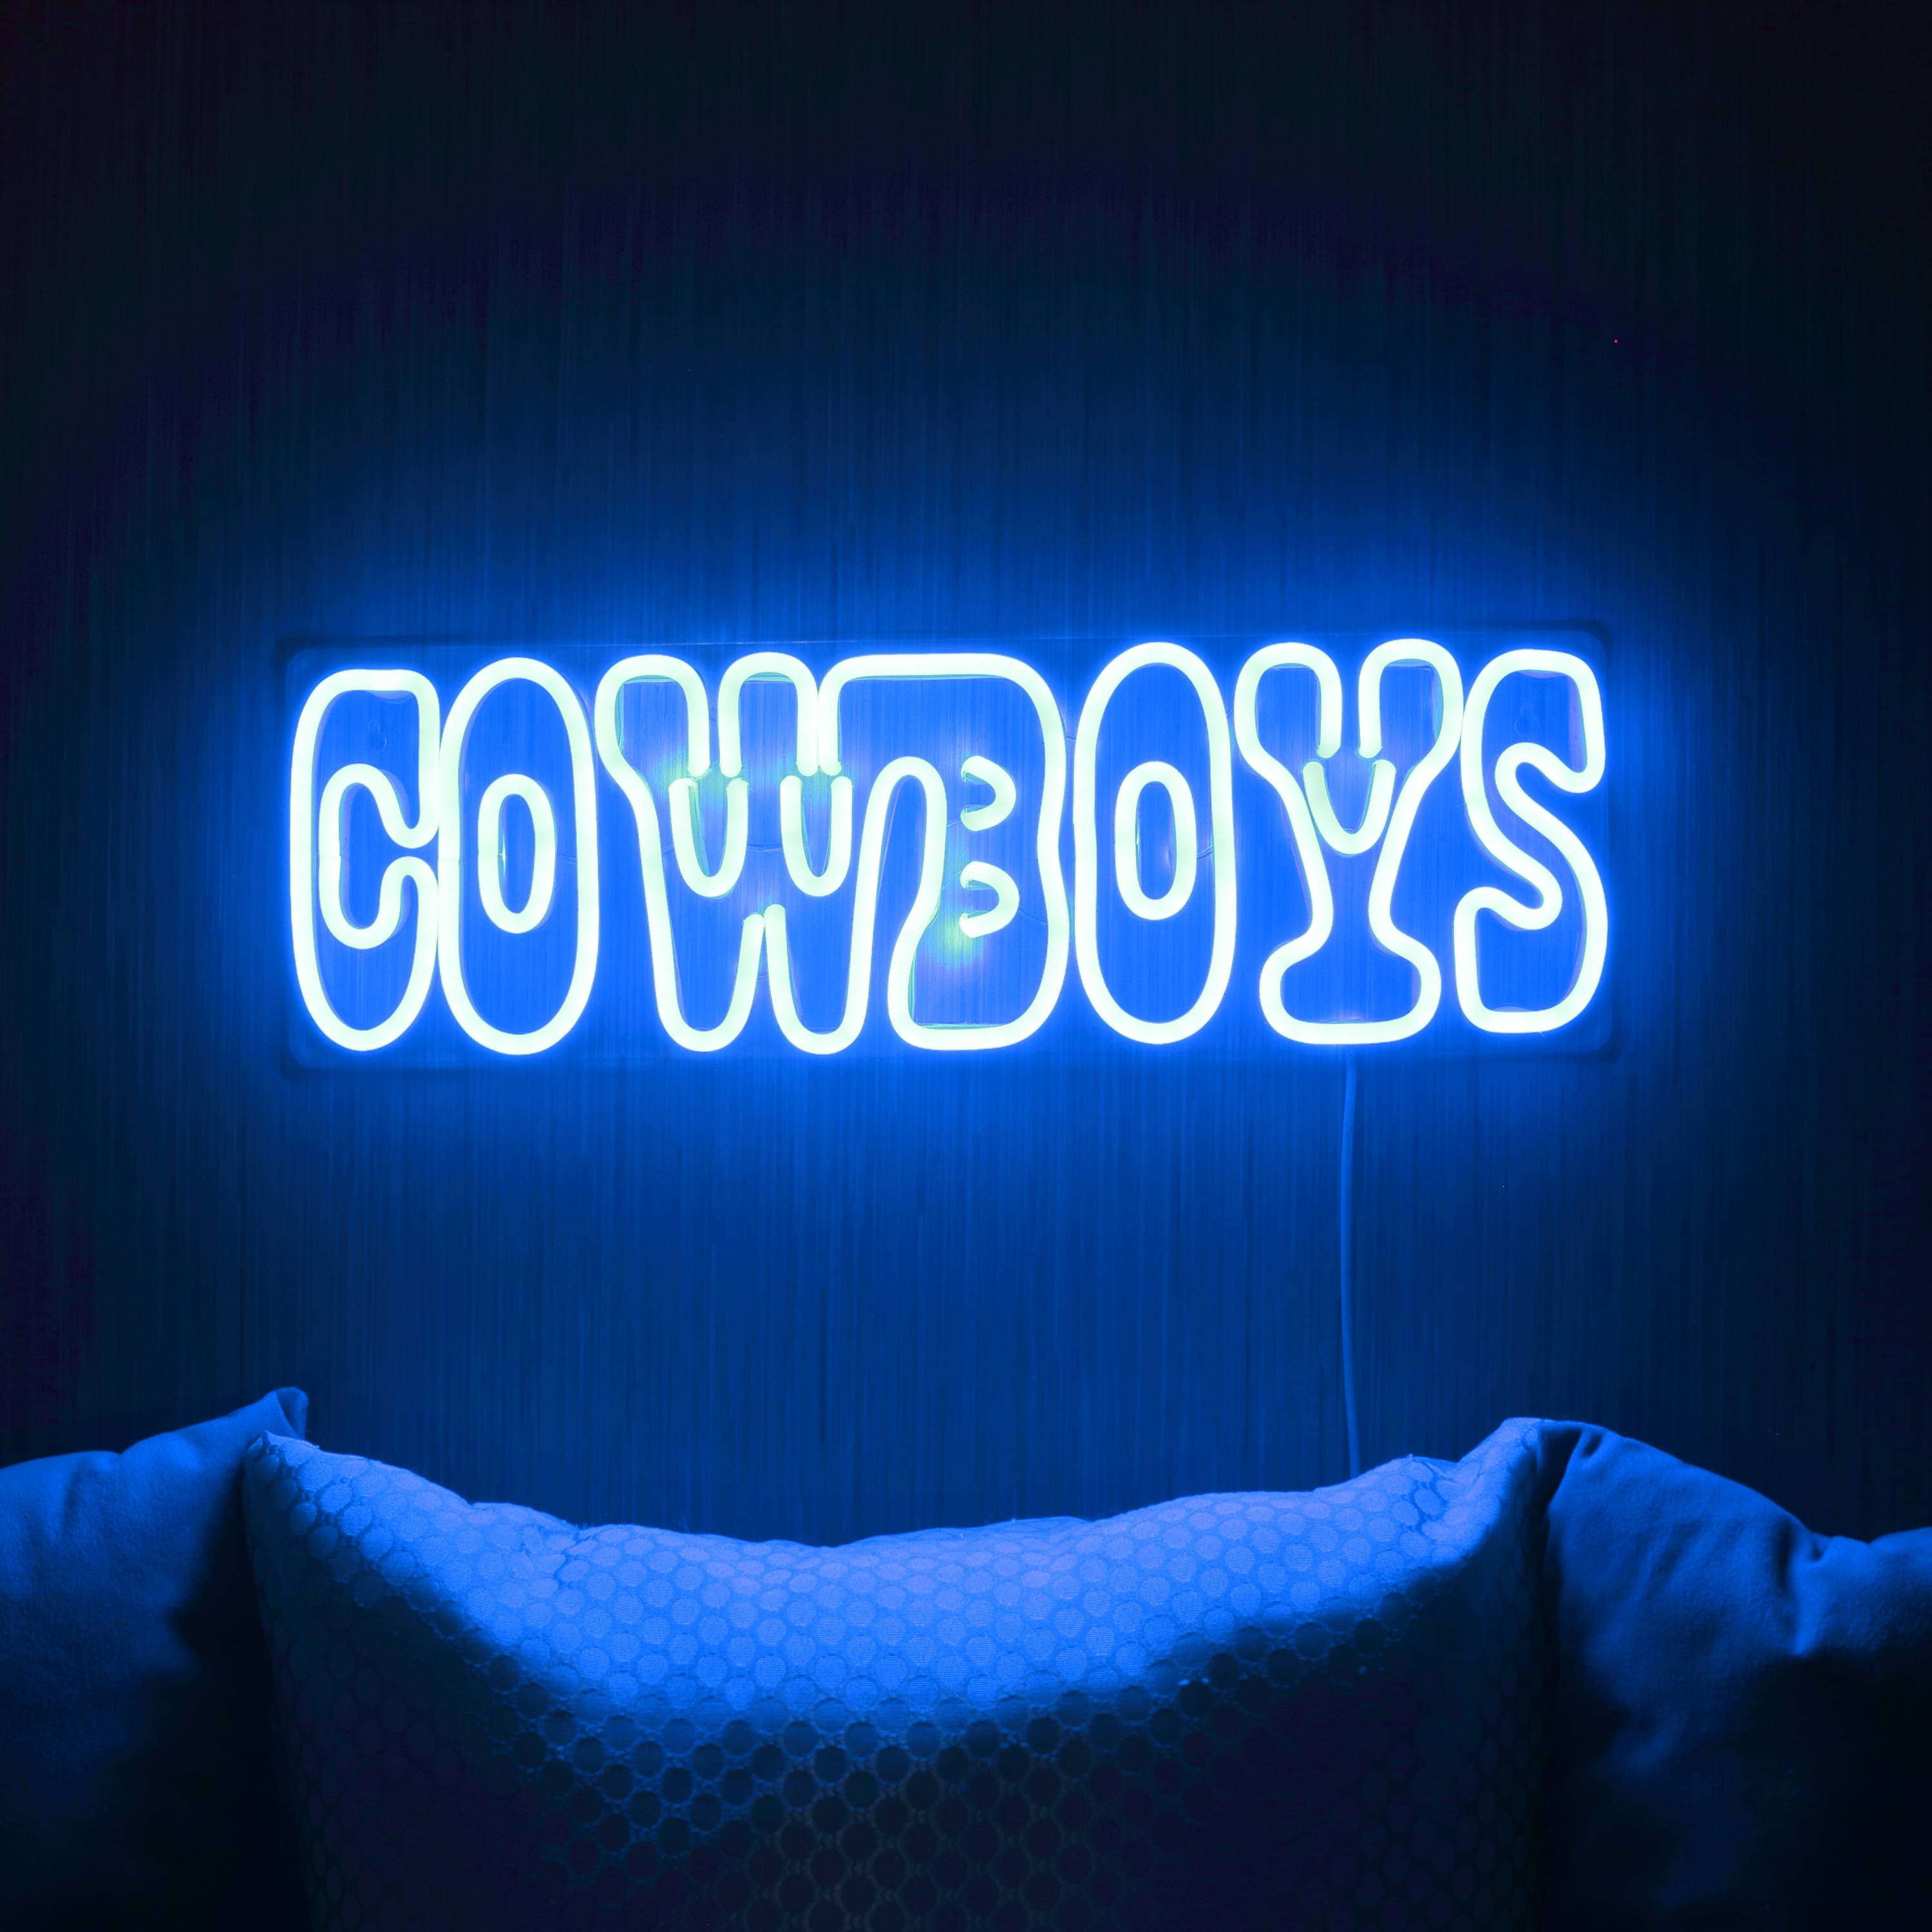 NFL COWBOYS Large Flex Neon LED Sign